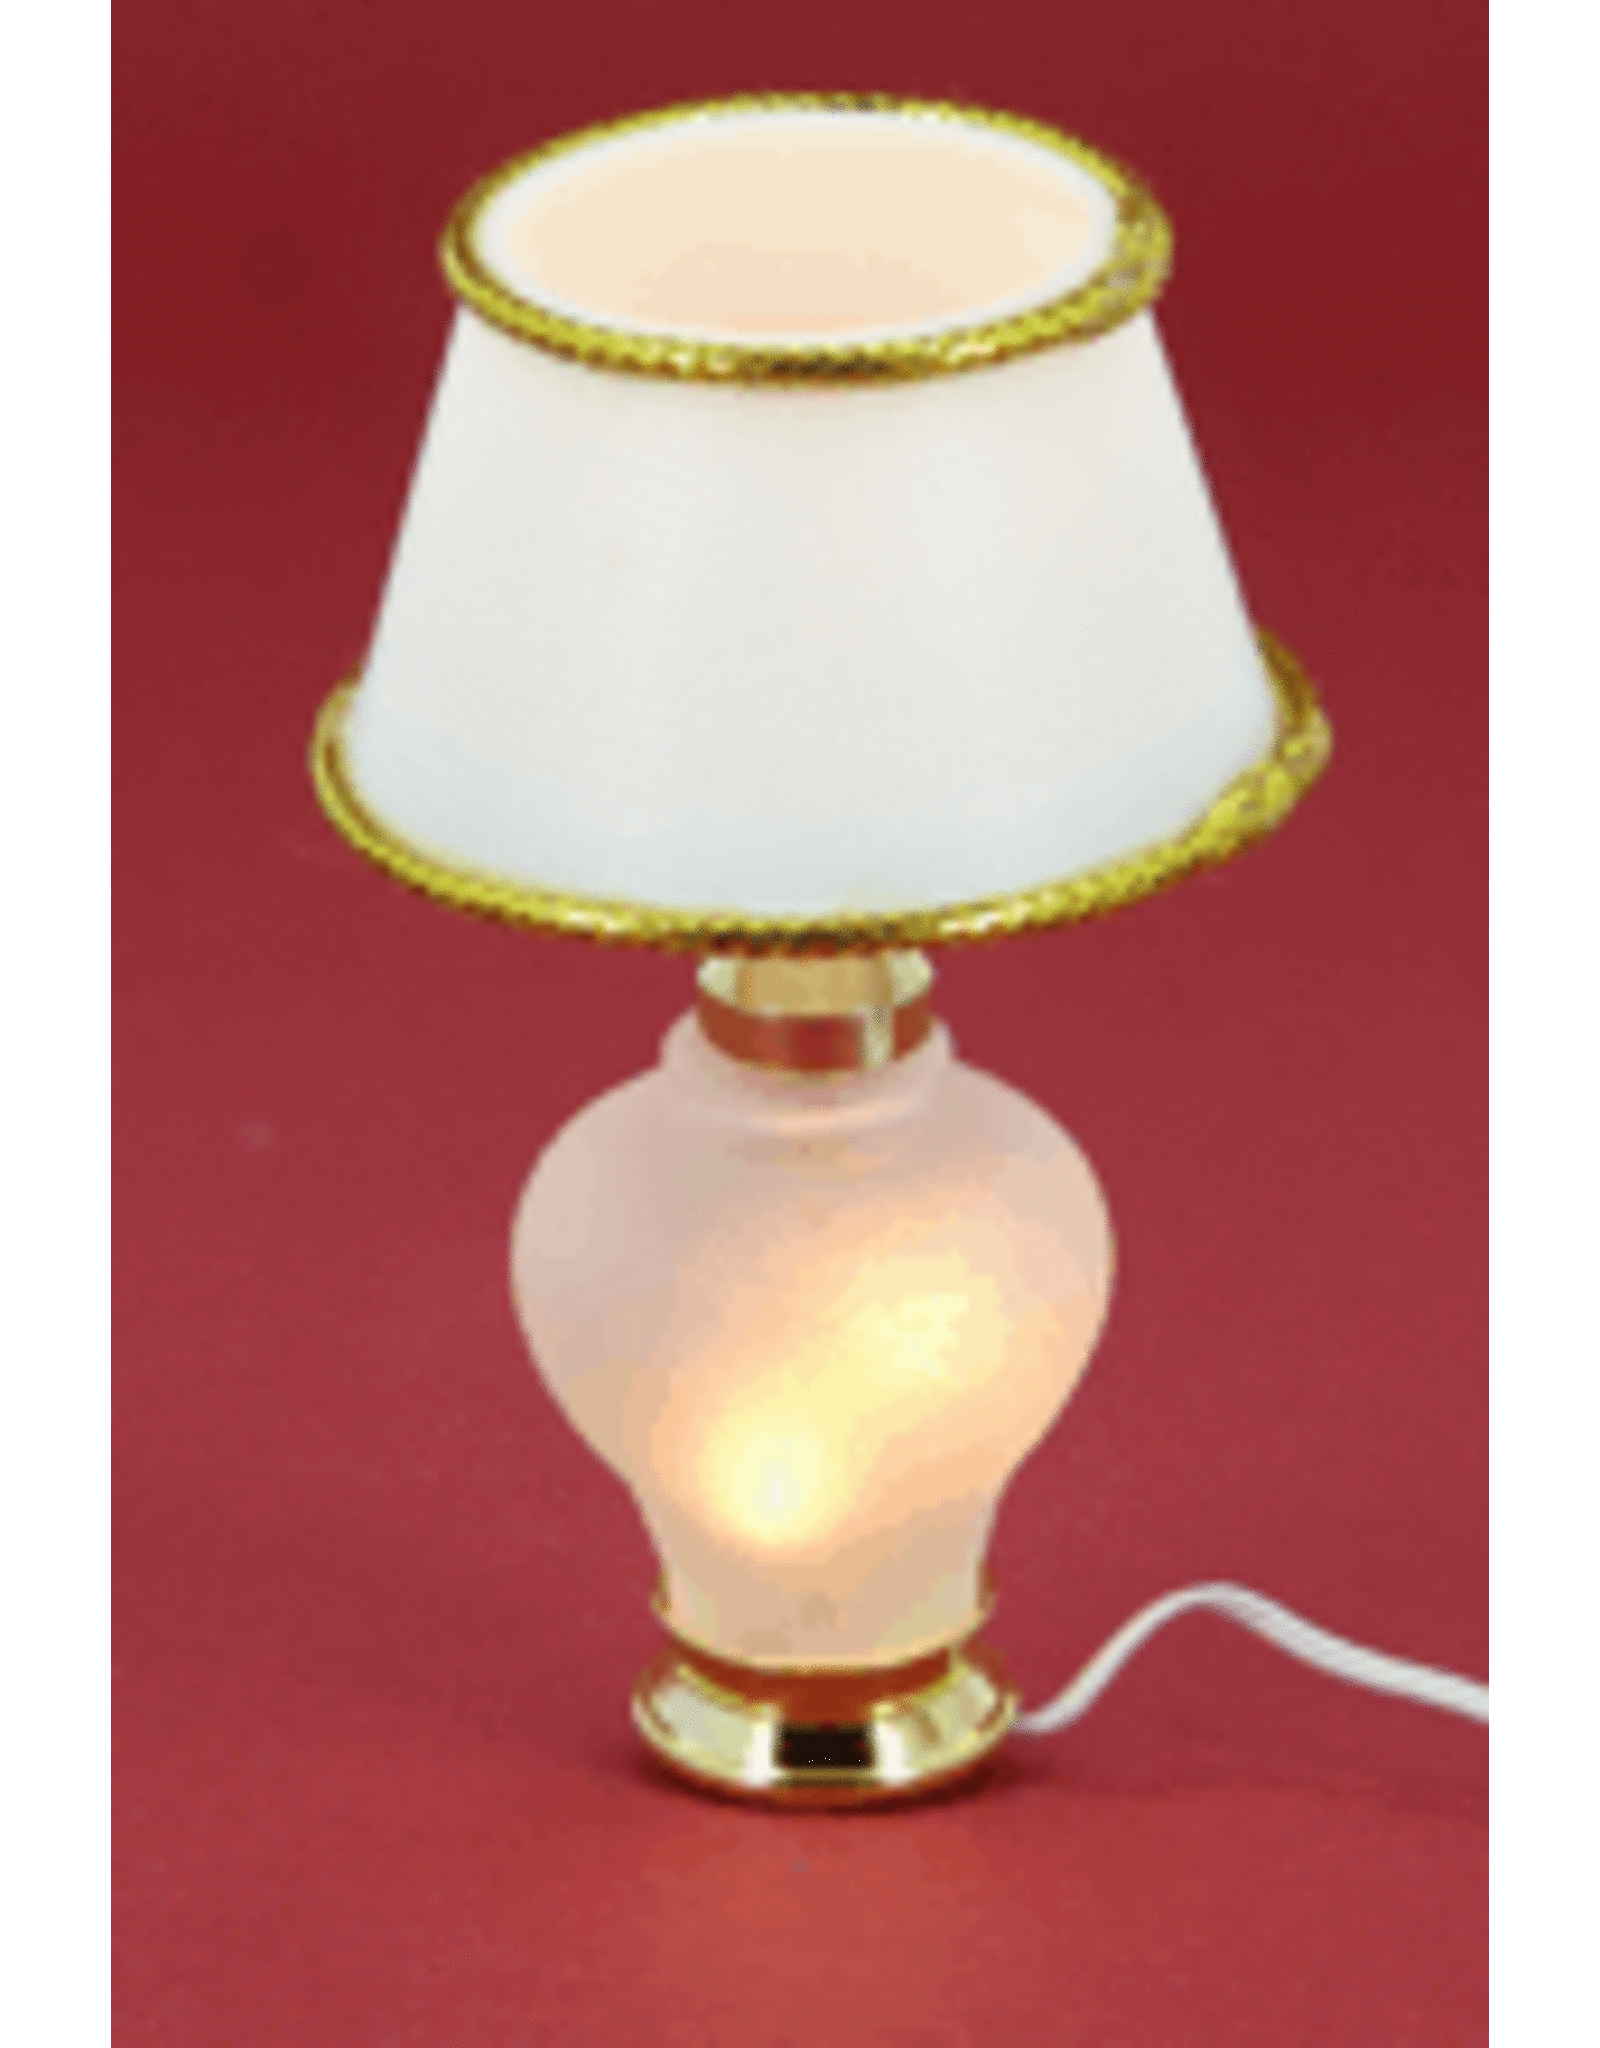 Lampe sur pied or-verre miniature 1:12